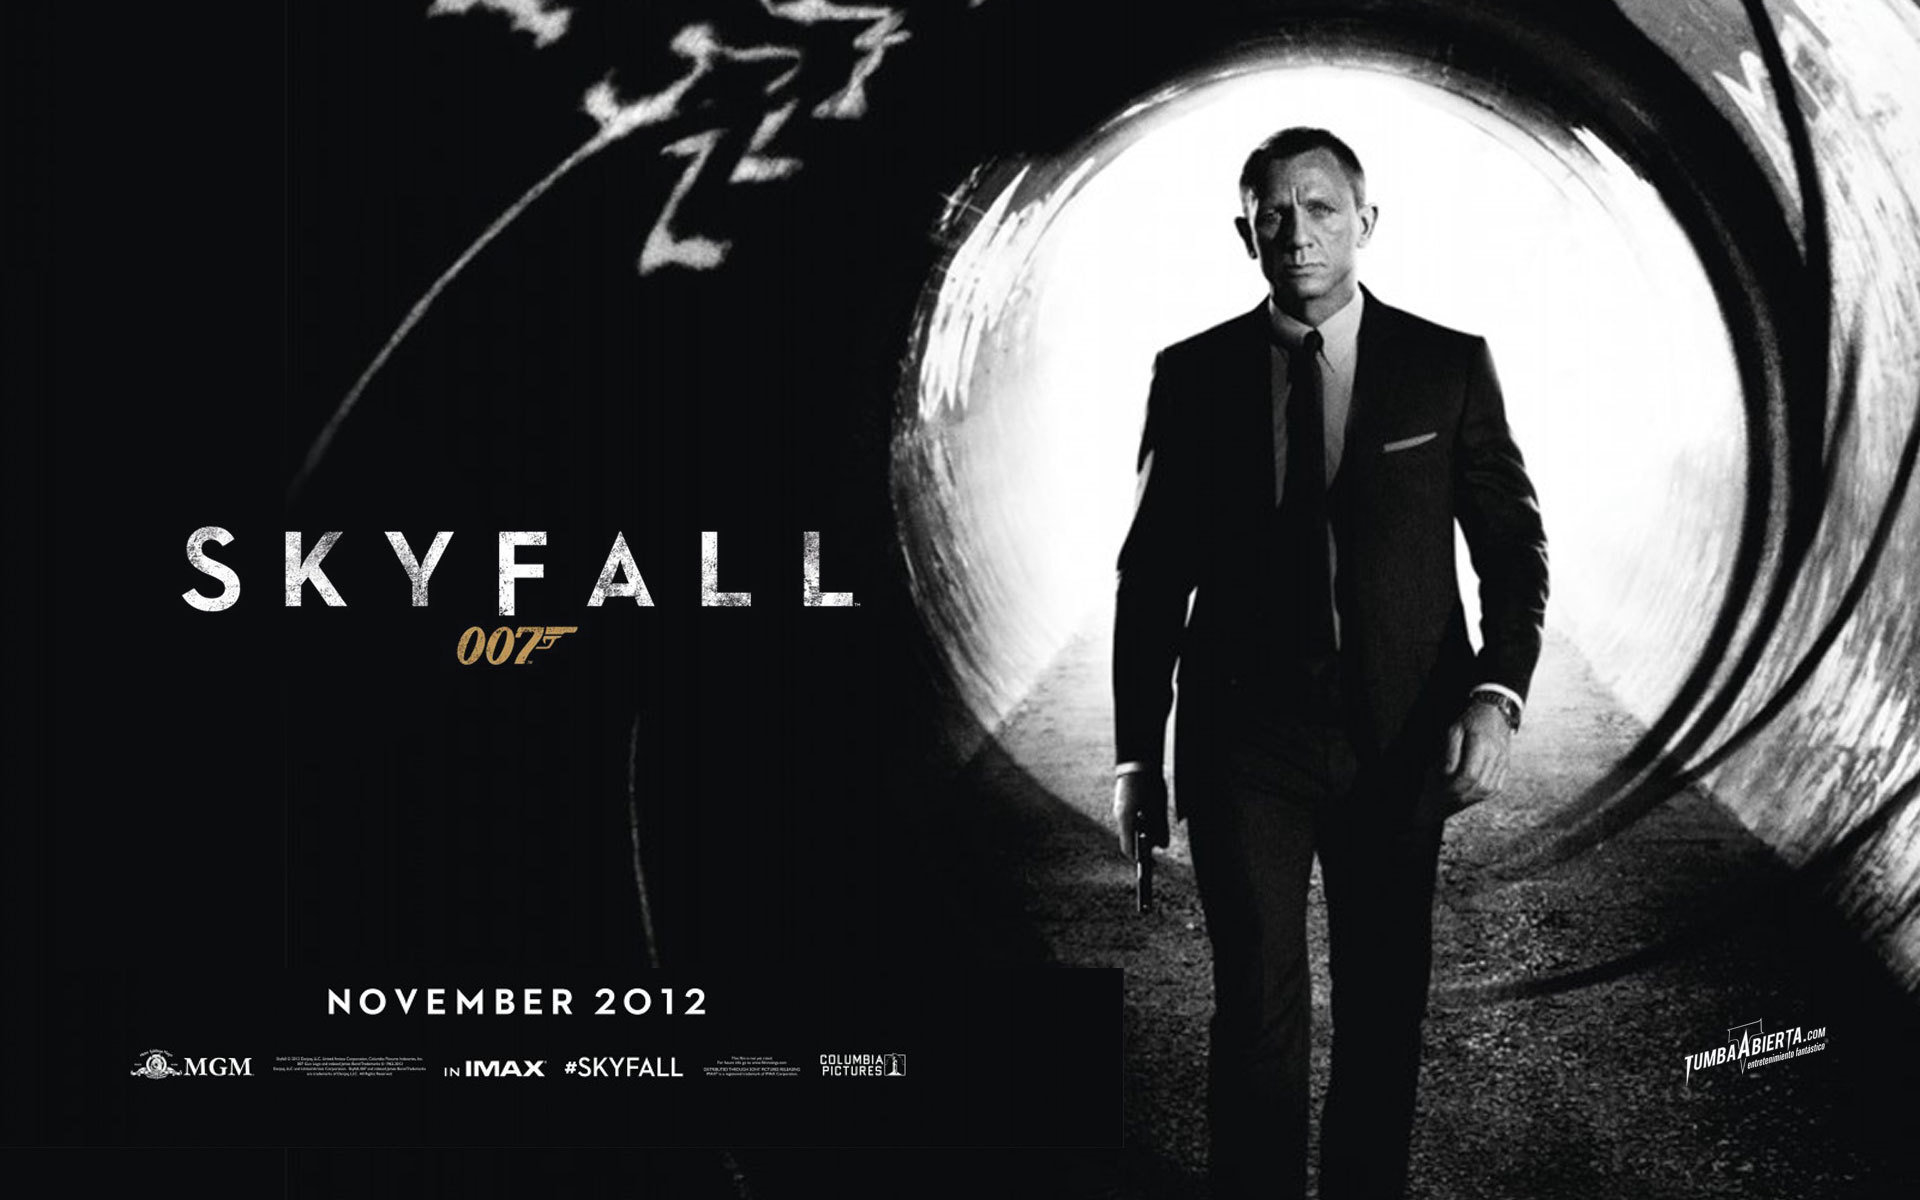 Skyfall - Skyfall (2012)